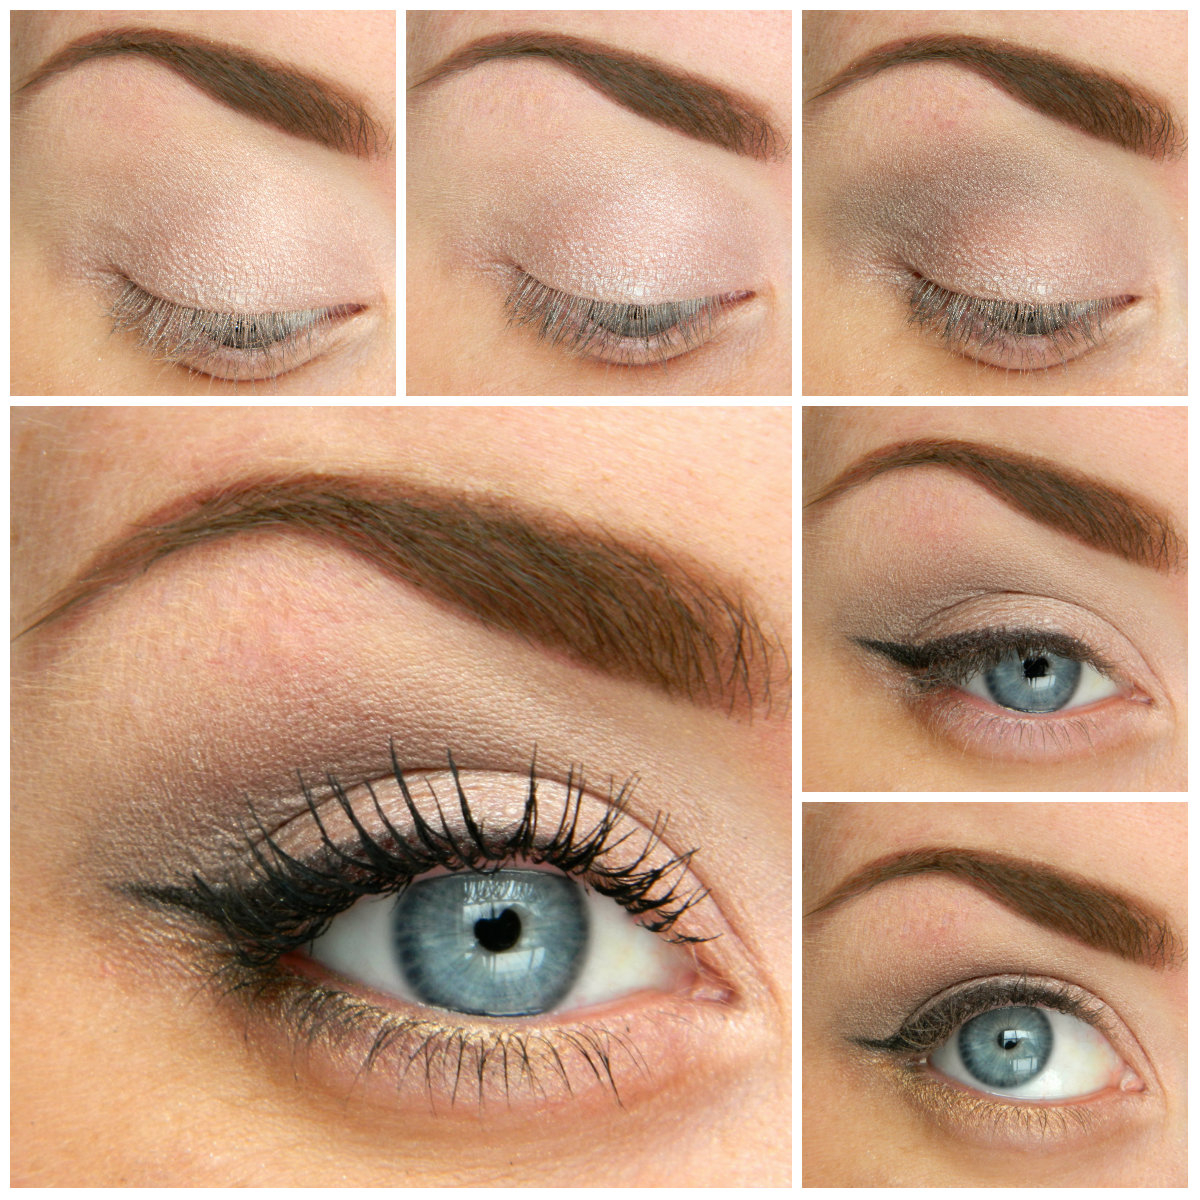 Light Eye Makeup 5 Ways To Make Blue Eyes Pop With Proper Eye Makeup Her Style Code